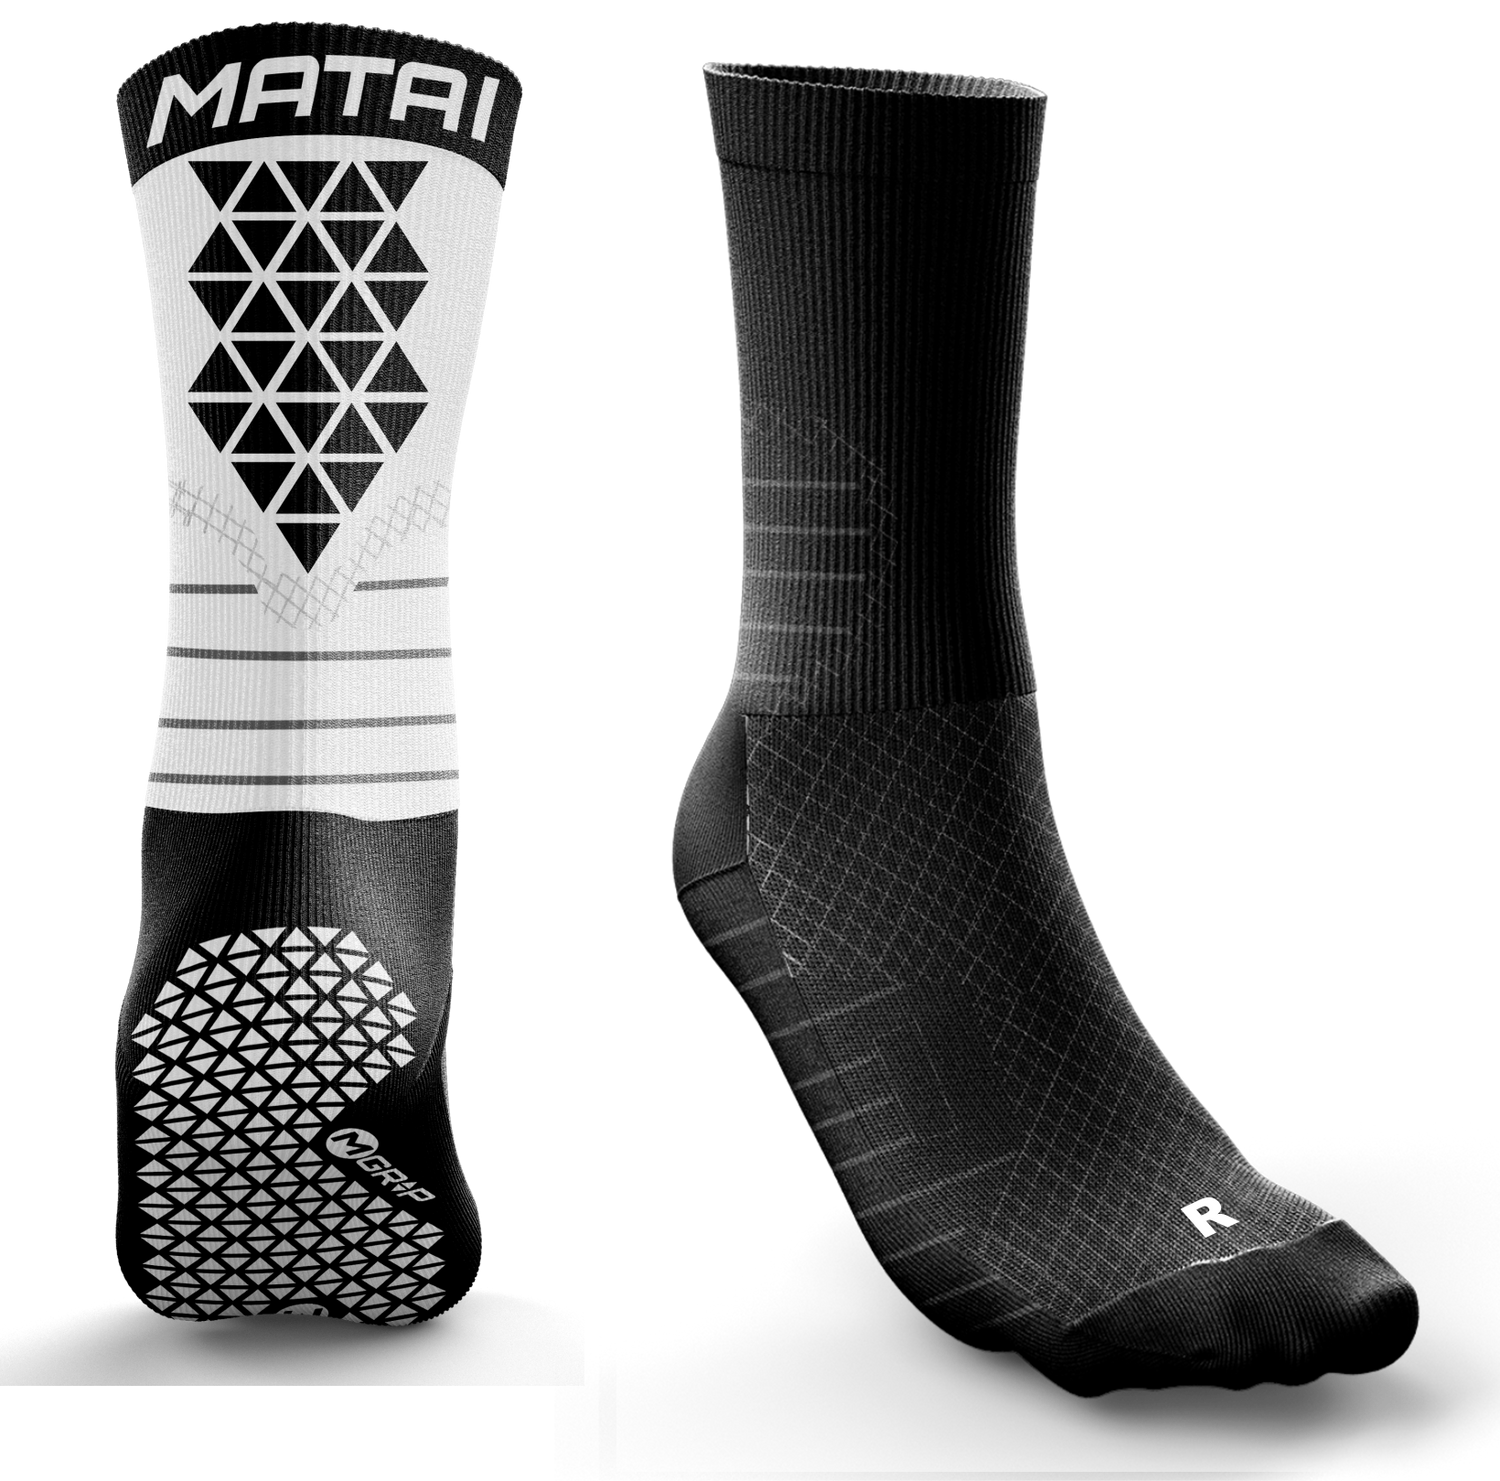 Matai Socks your One Stop Sock Shop